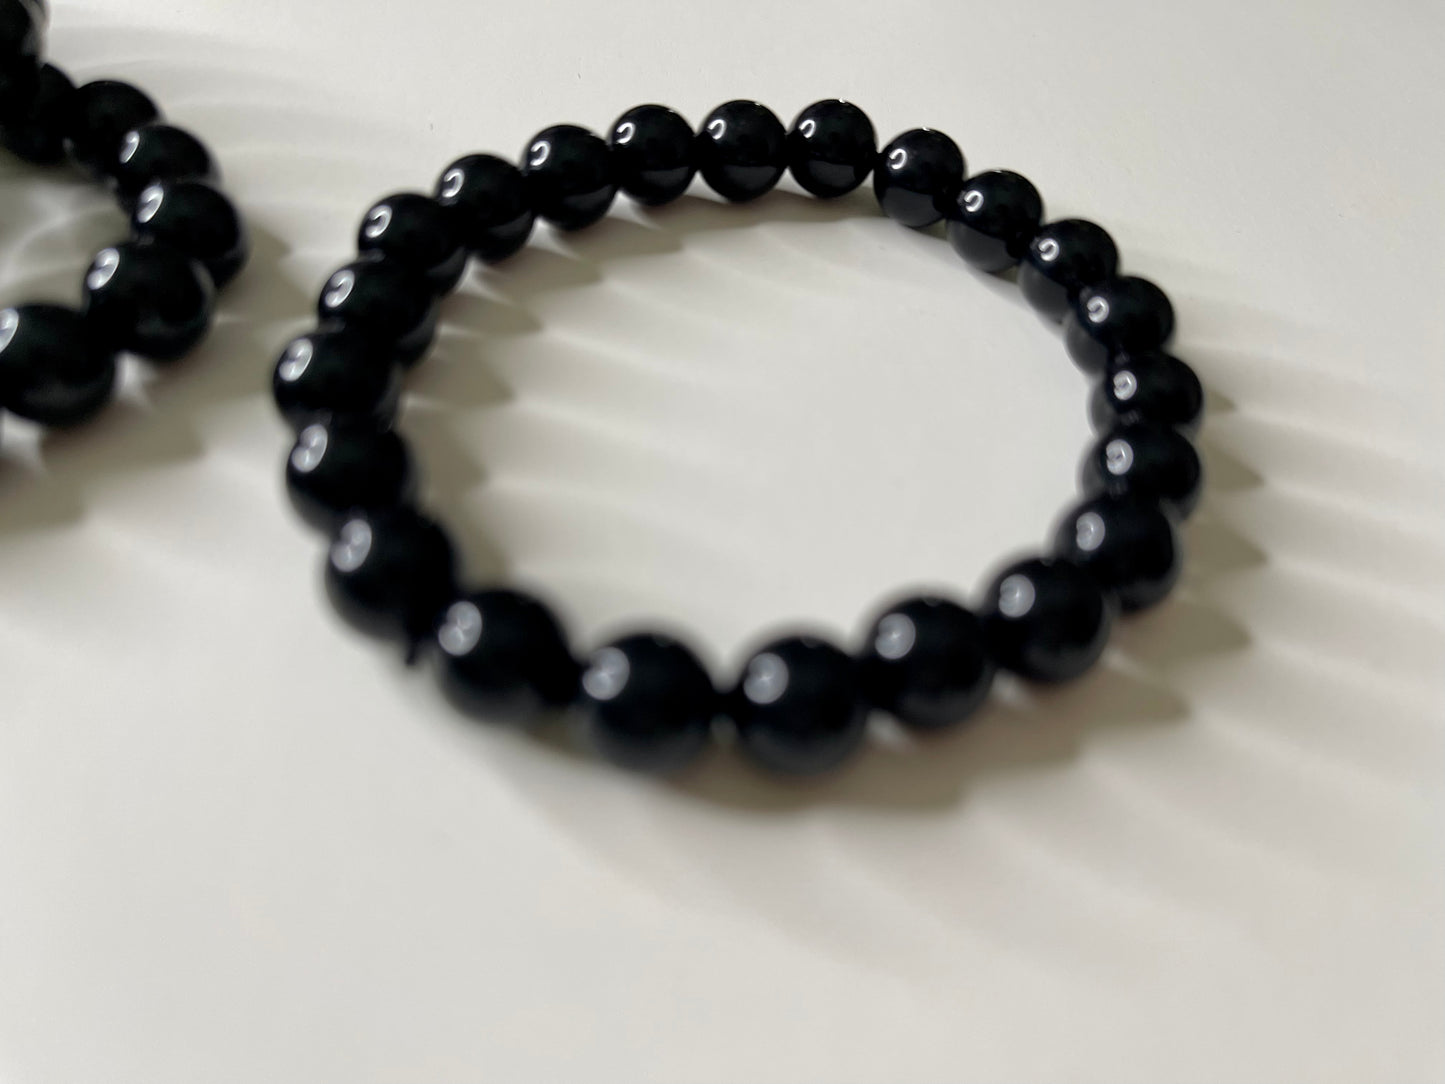 Black Obsidian bracelet 8mm